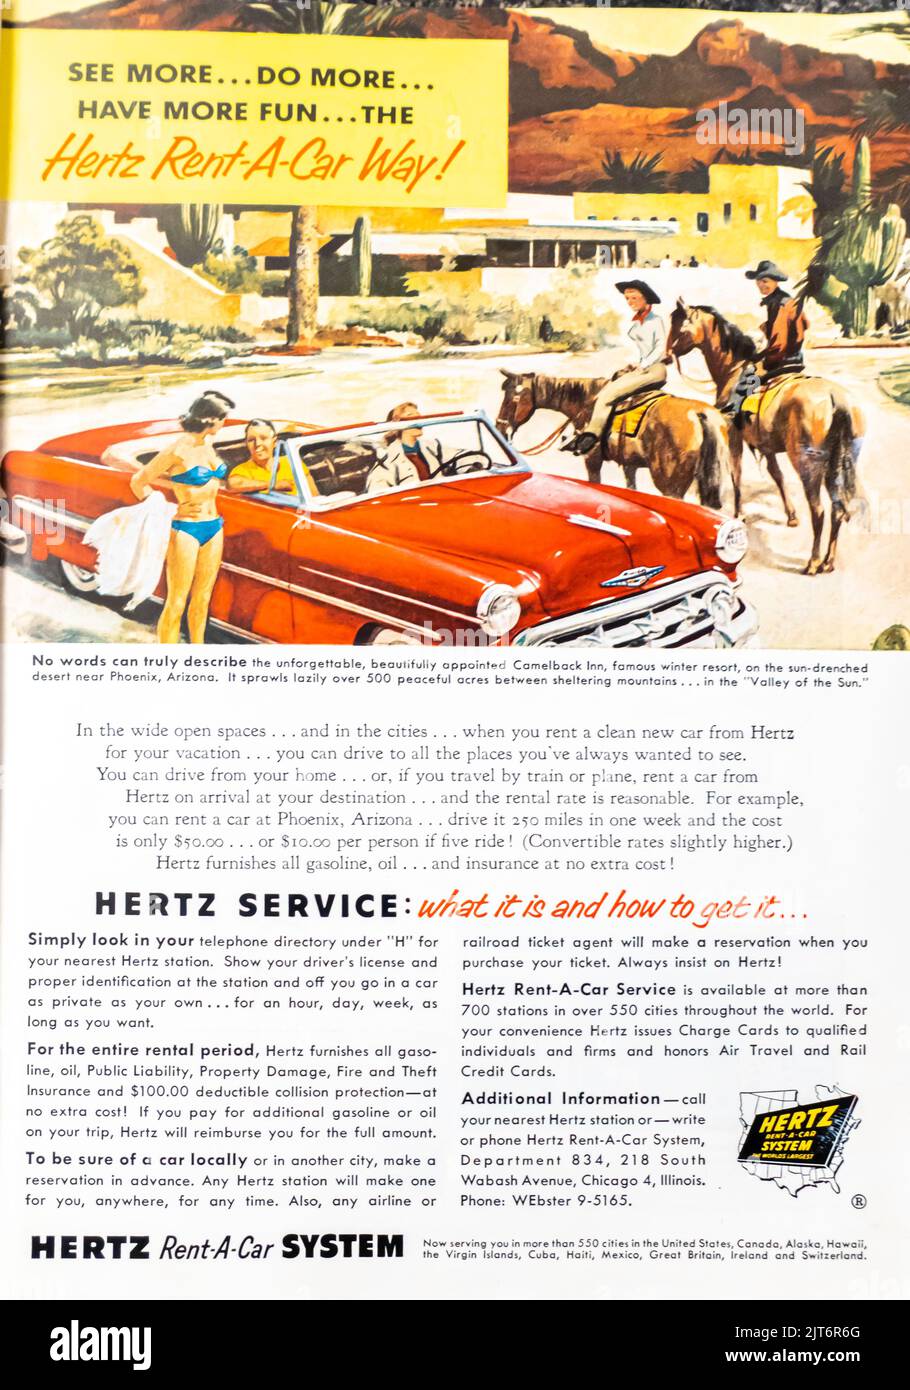 Hertz, car rental service advertisement placed inside a NatGeo magazine, 1954 Stock Photo